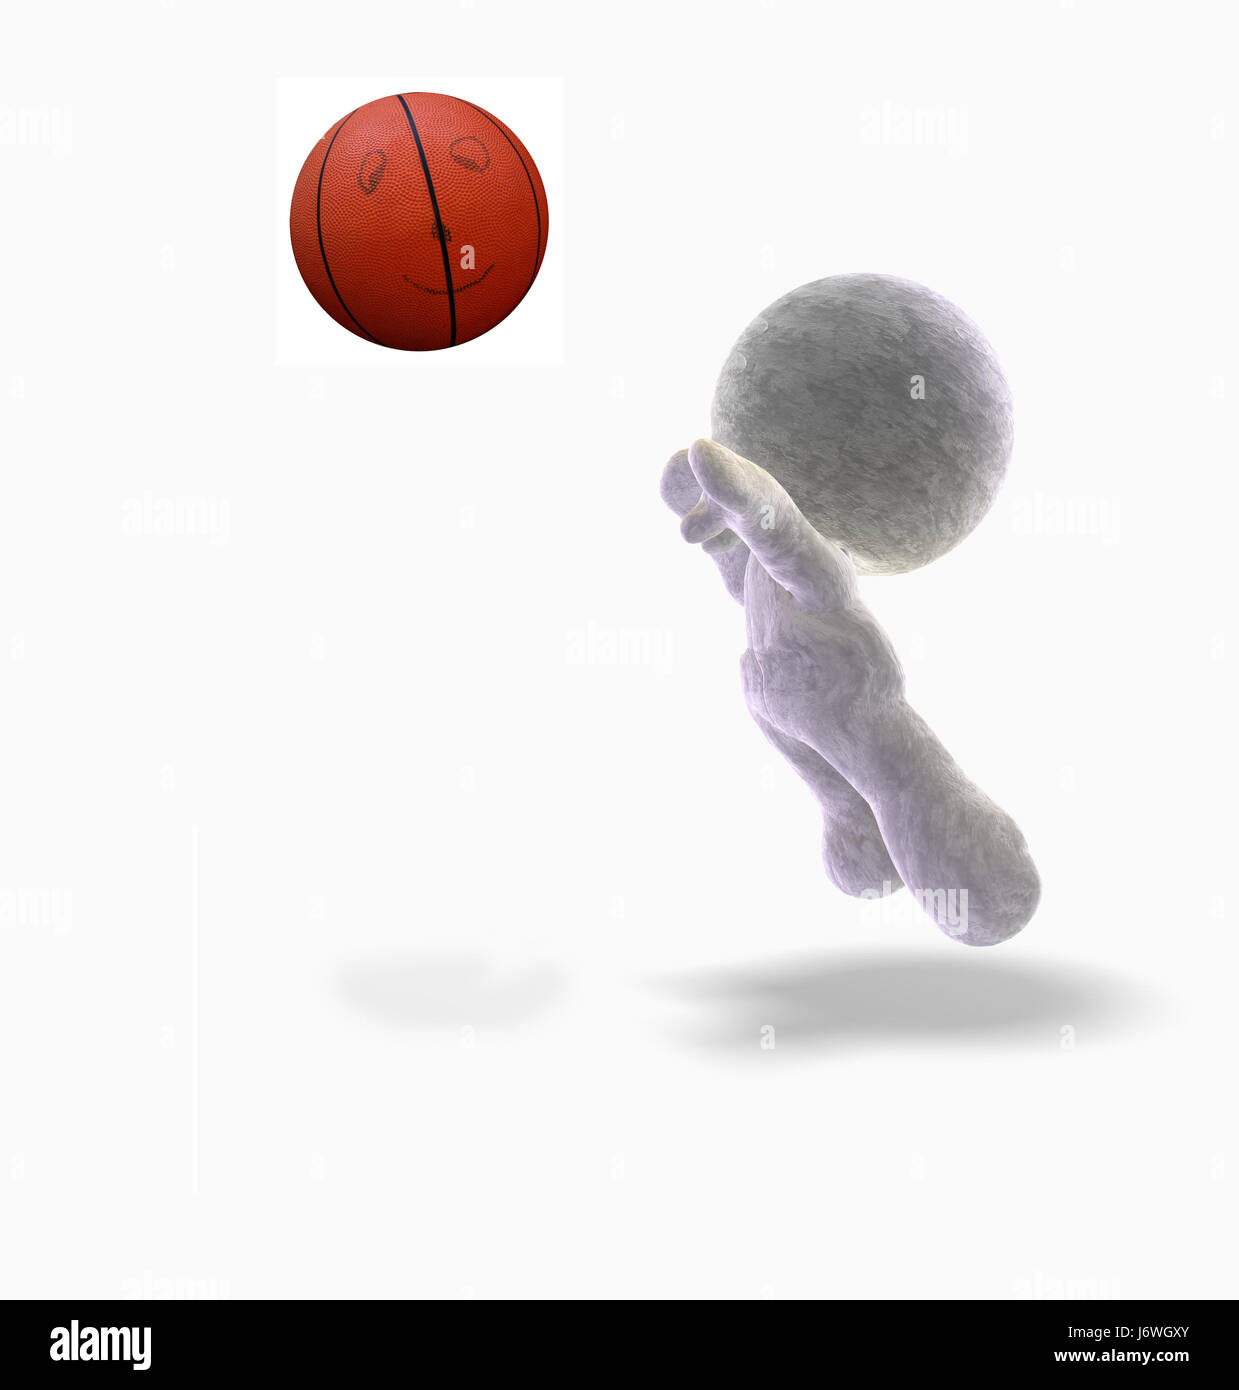 abstract sport basketball cartoons grey gray ball design presentation art Stock Photo